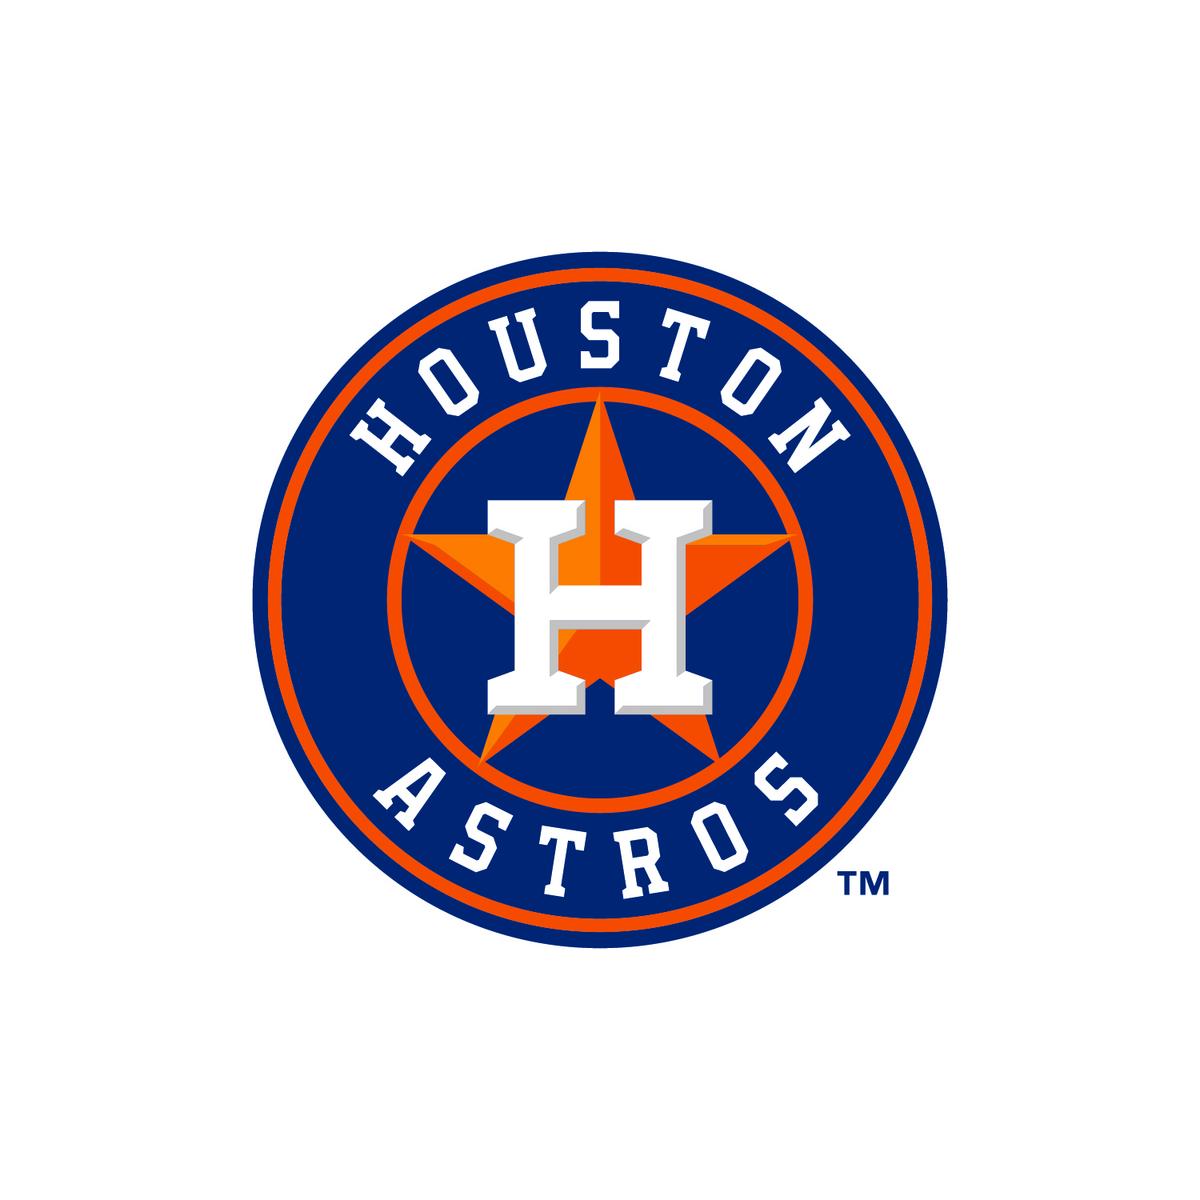 Houston Astros Officially Unveil New Logos, Uniforms – SportsLogos.Net News